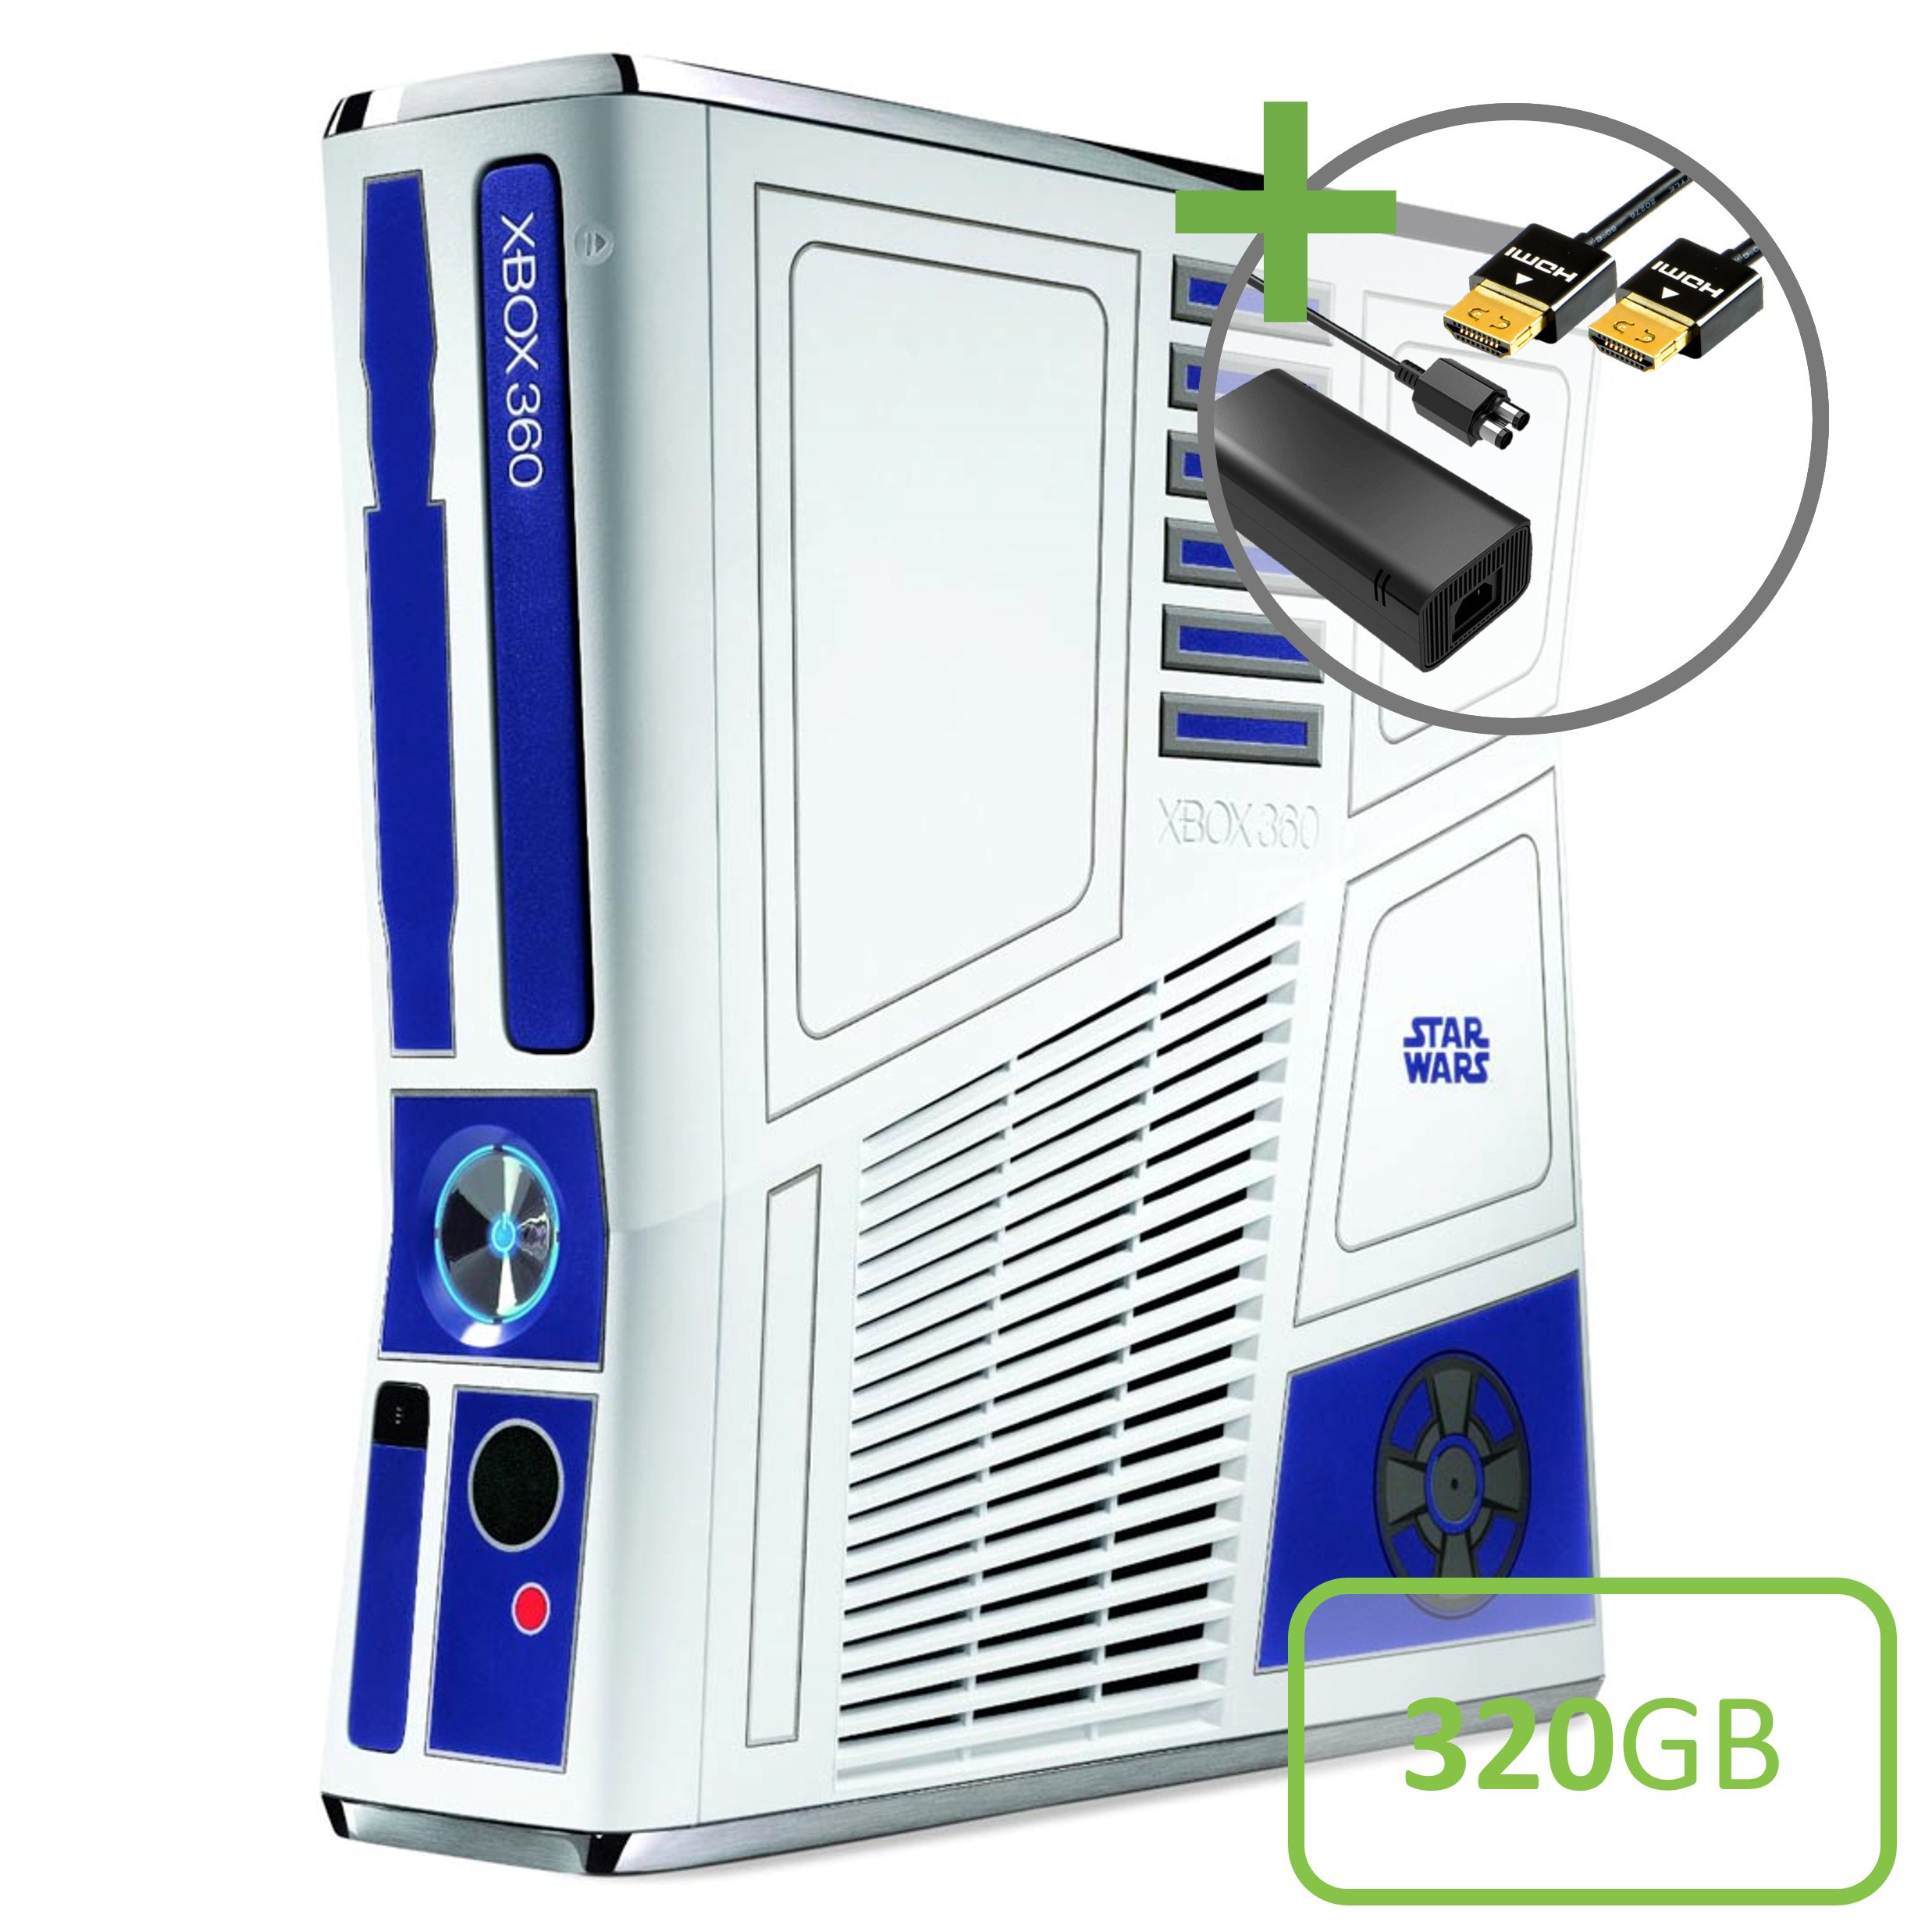 Microsoft Xbox 360 Slim Console (320GB) - Star Wars R2-D2 Edition - Xbox 360 Hardware